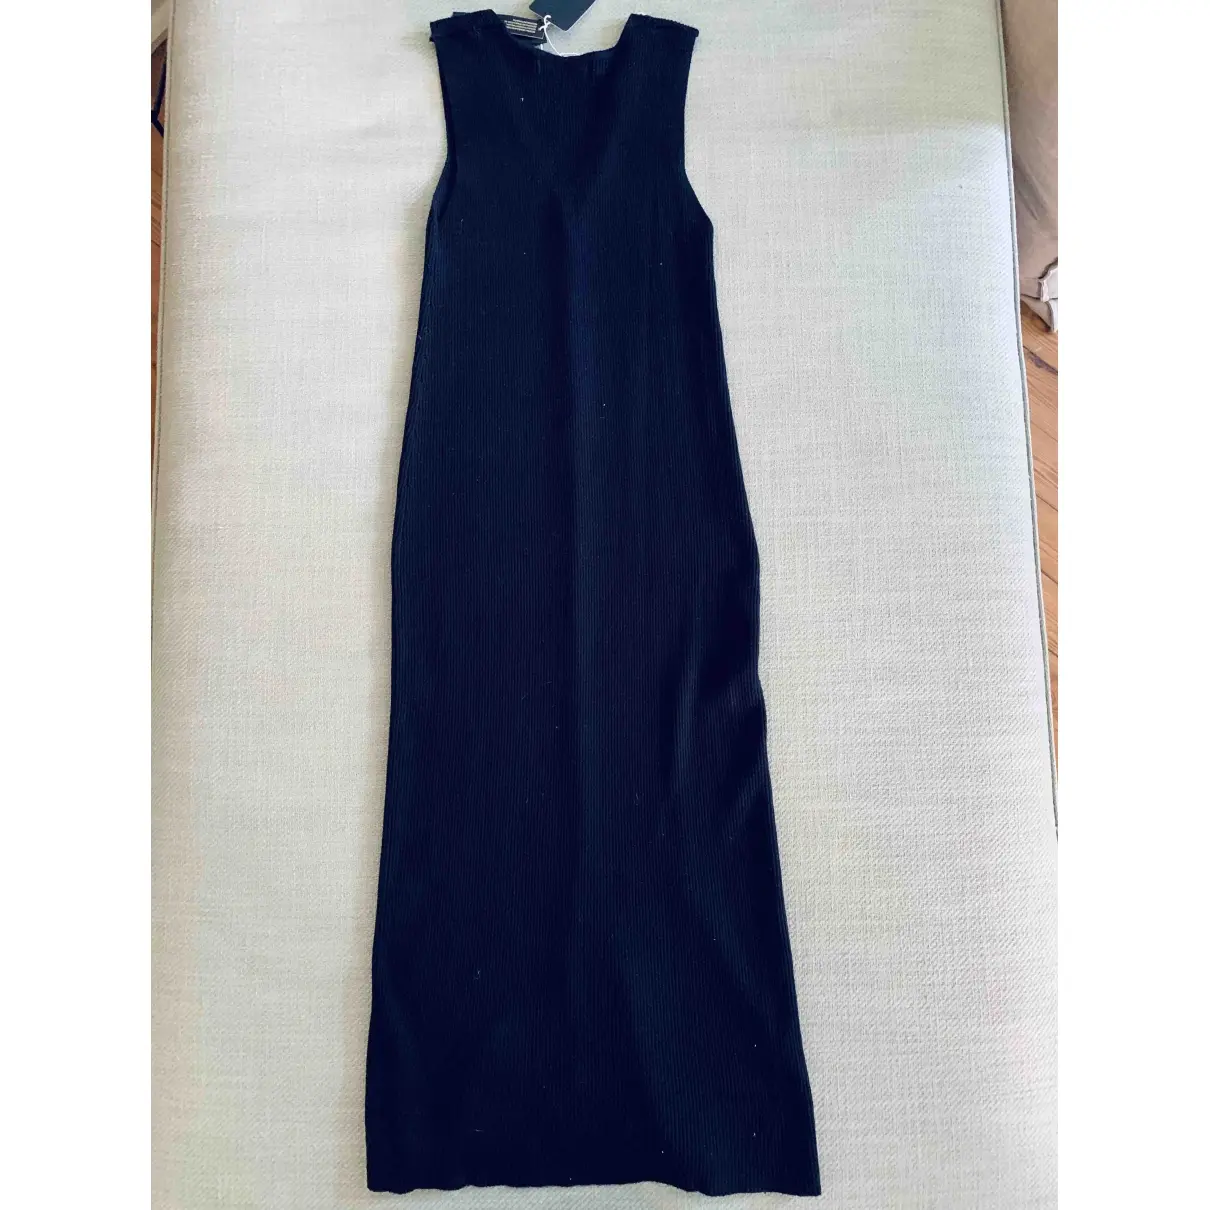 Zara Mid-length dress for sale